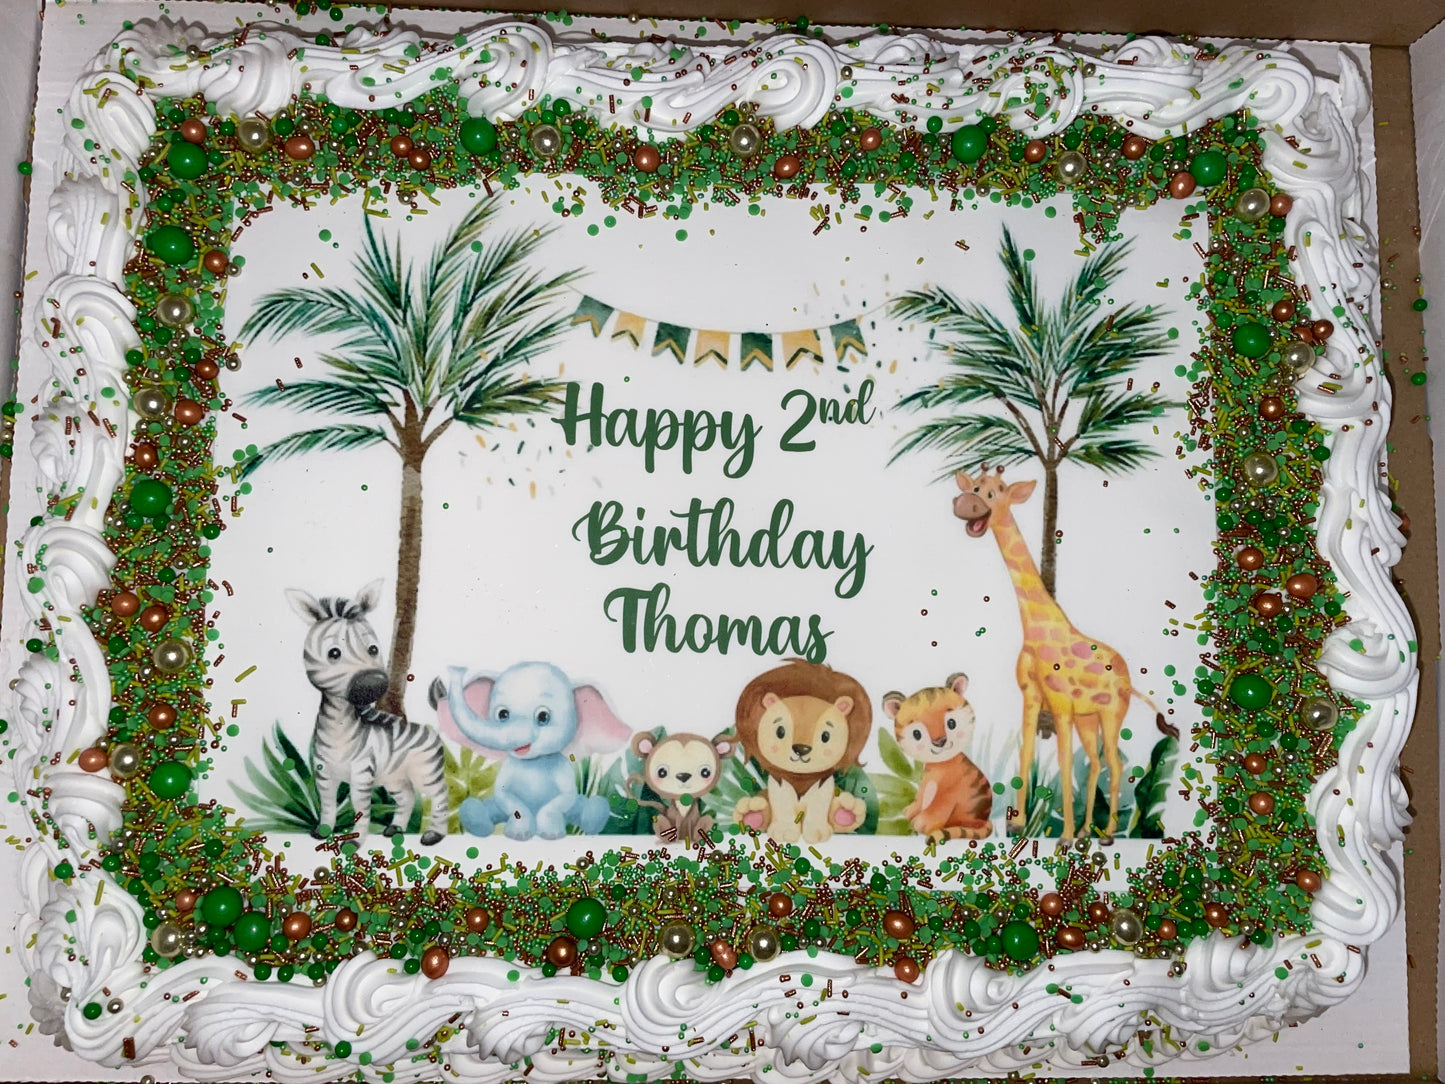 Personalised DIY Costco Cake Decorating Kit
Topper & Sprinkes included Birthday Topper
Cake